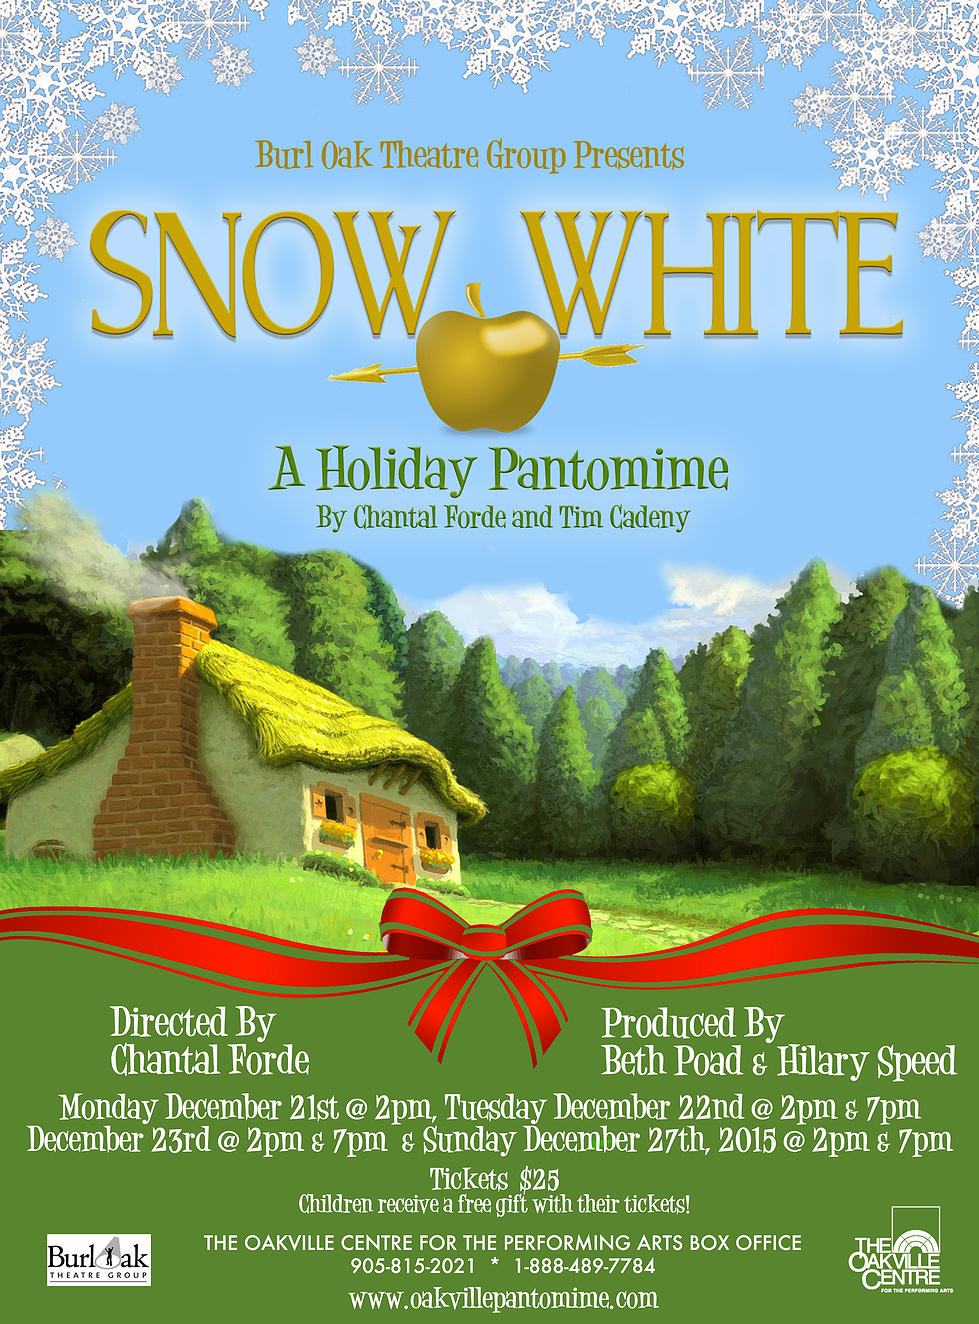 Snow White - Burl Oak Theatre Group